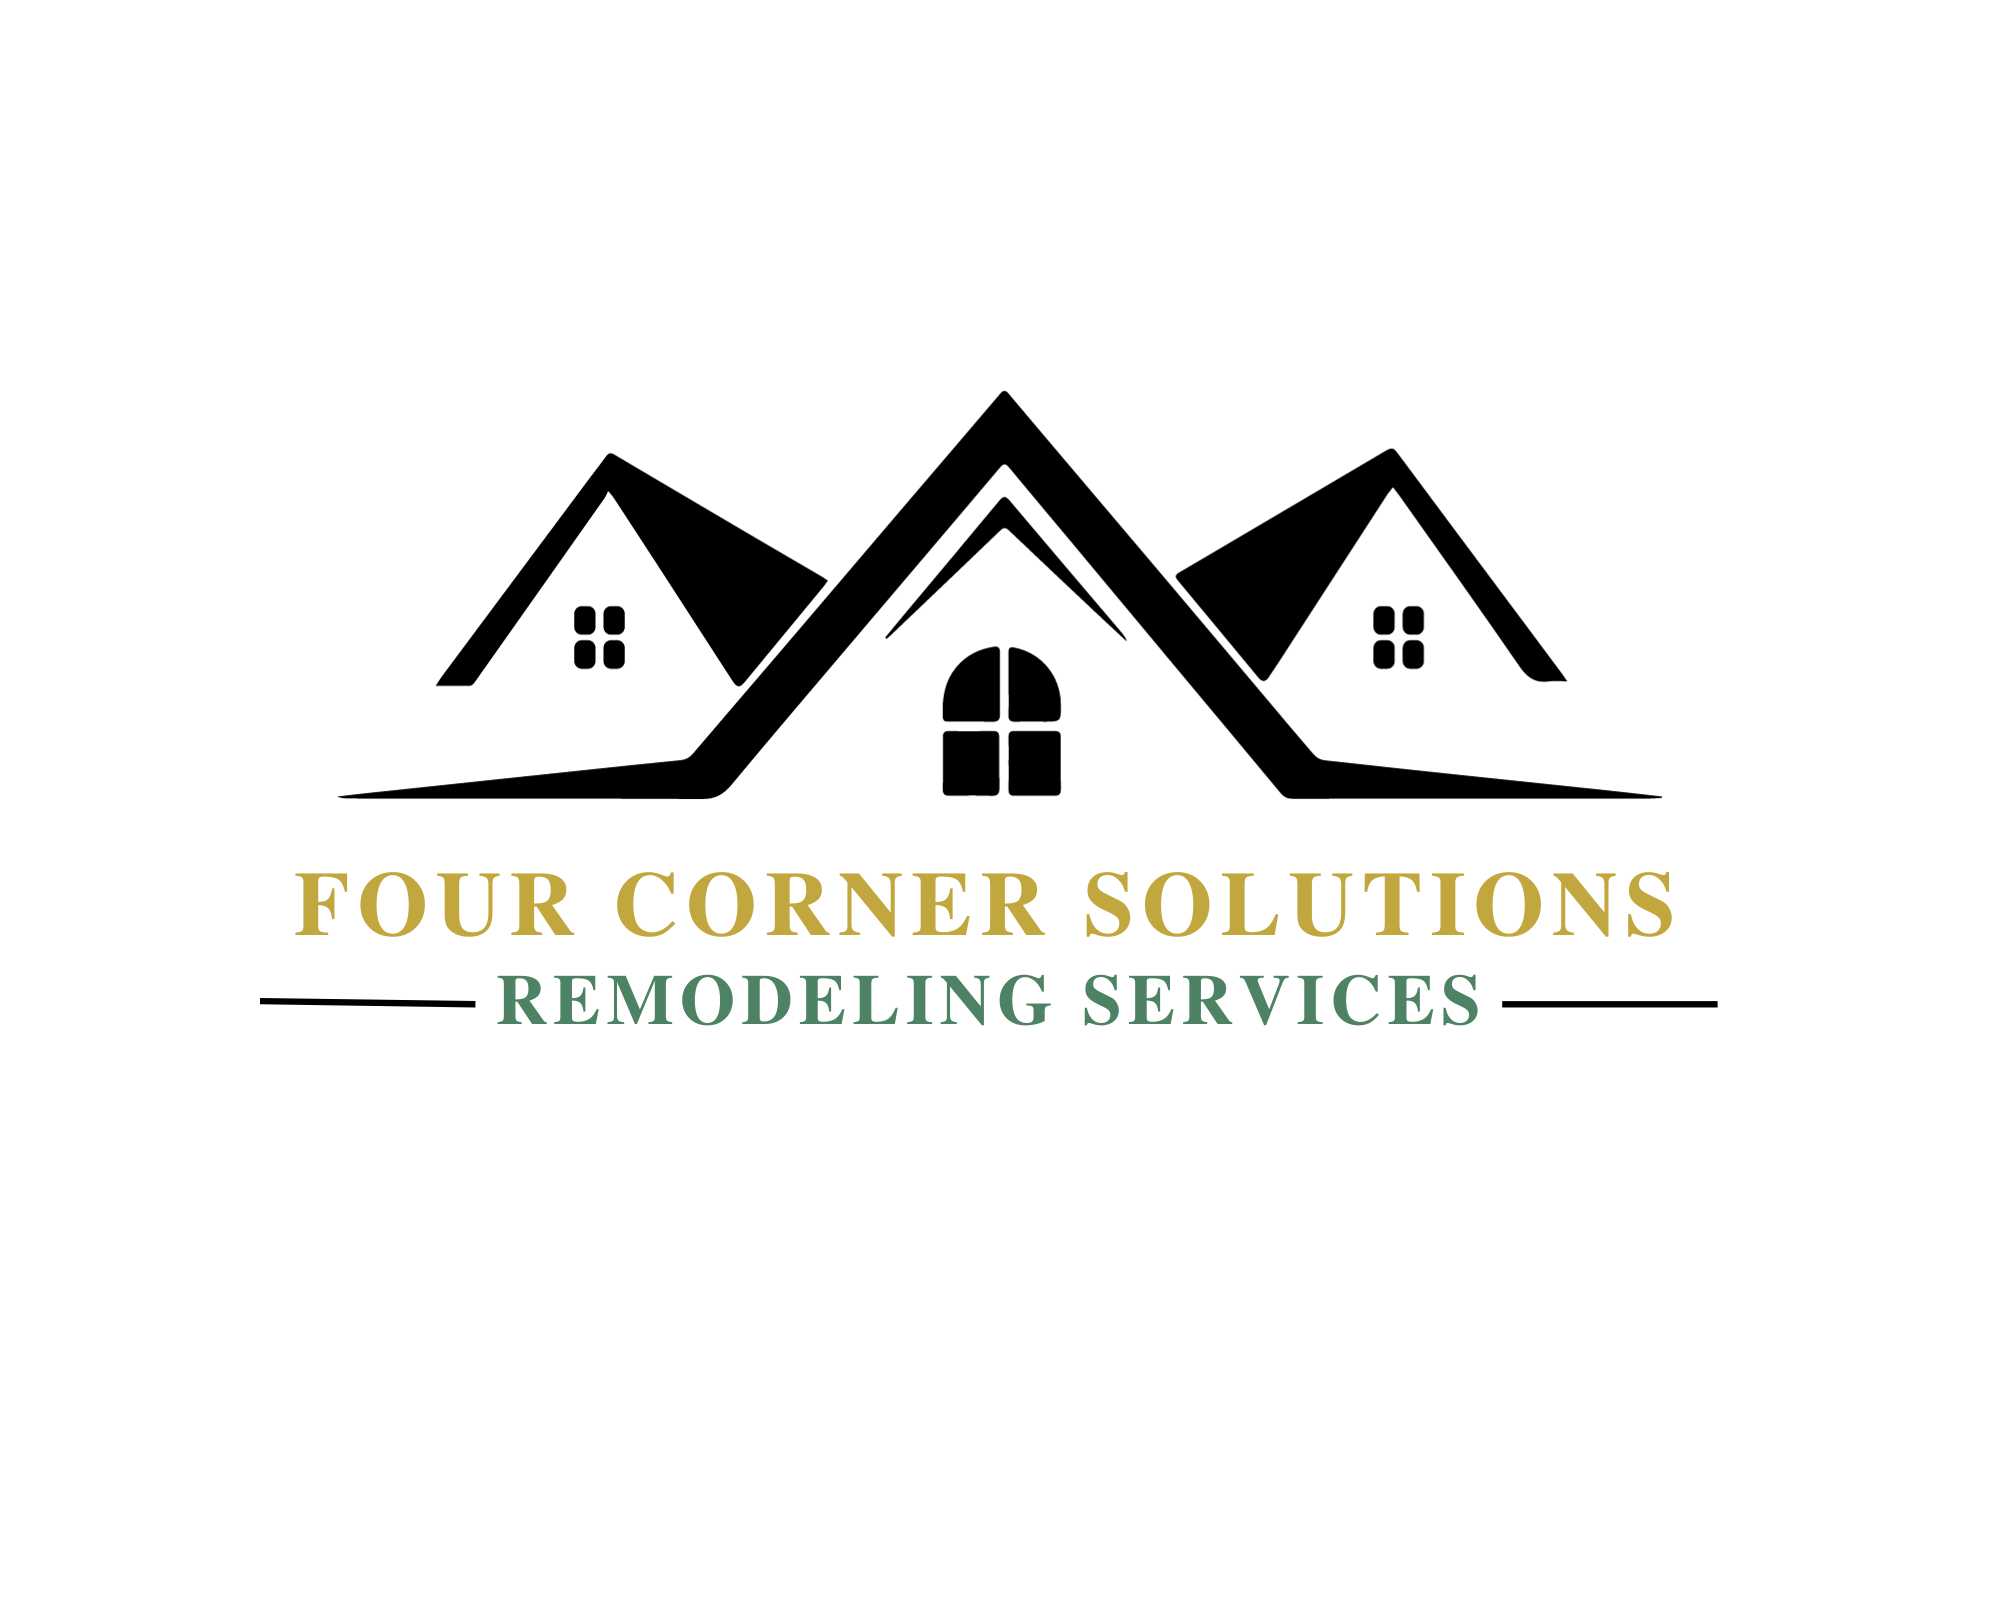 Four Corner Solutions